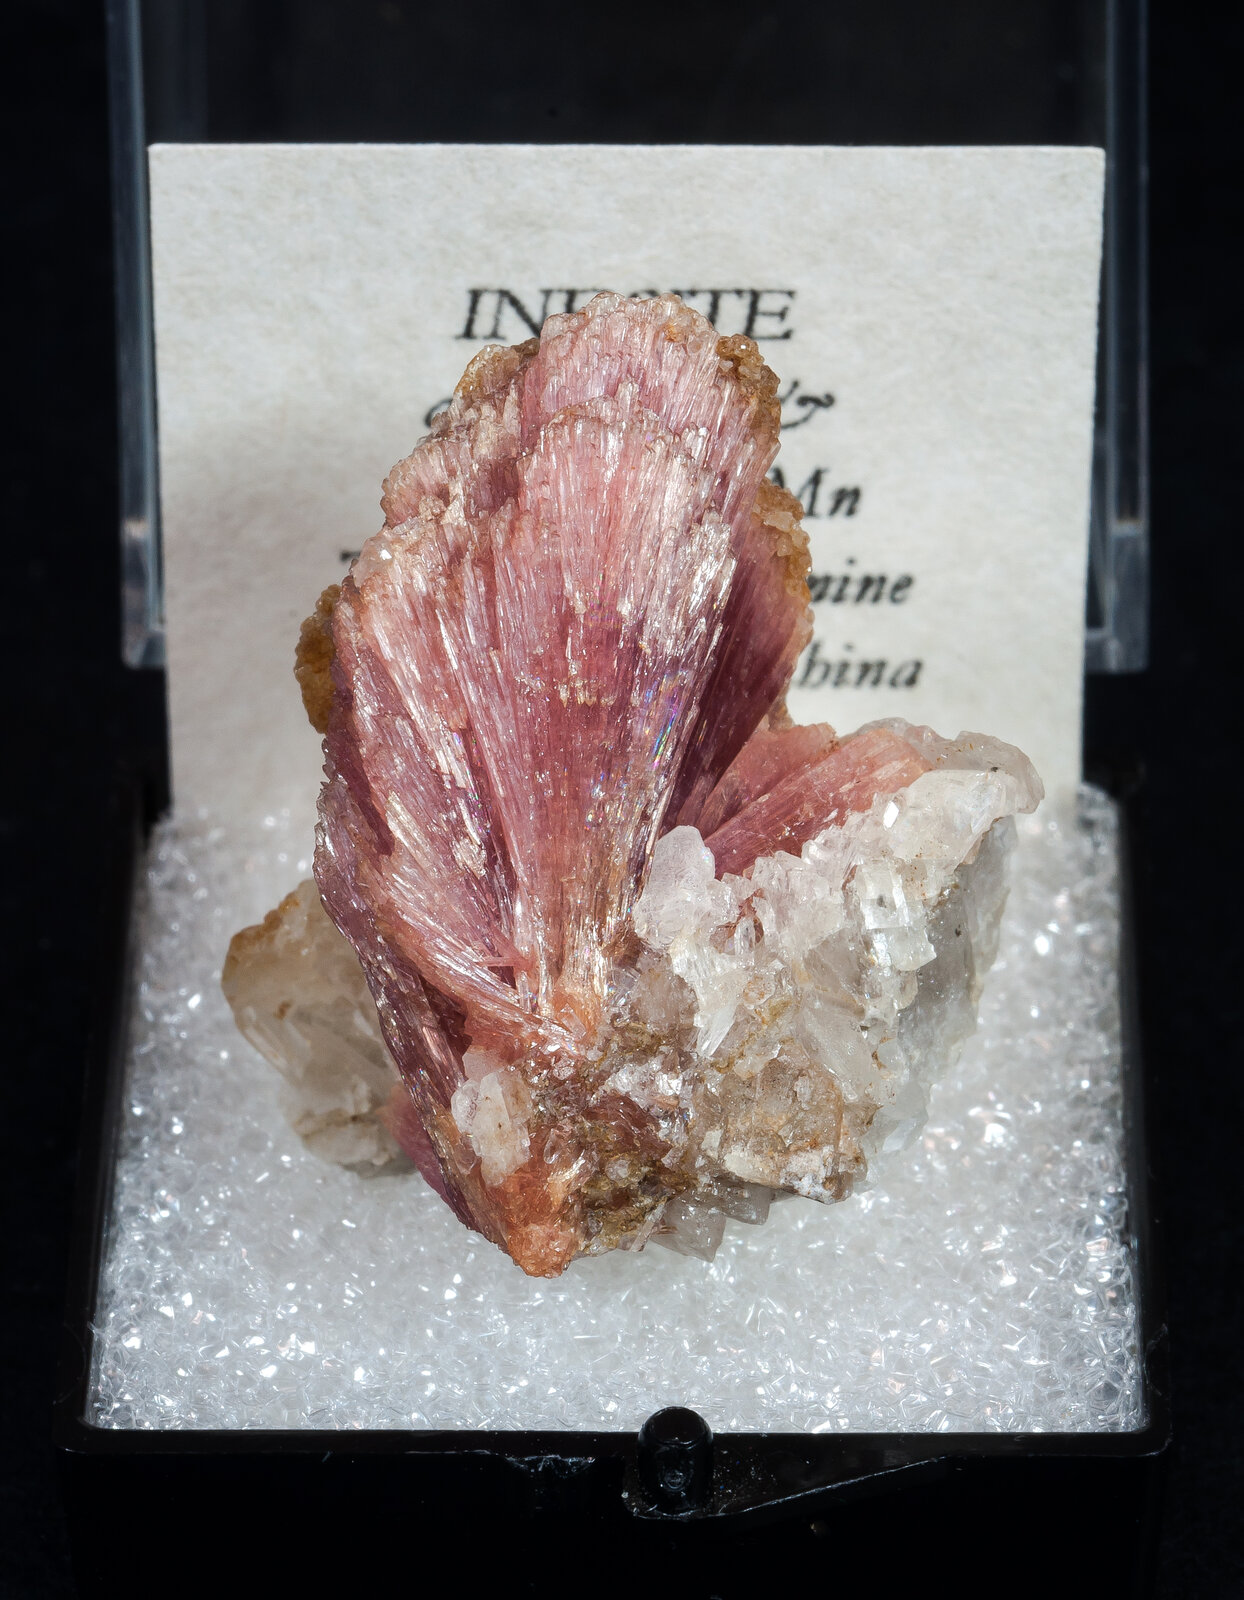 specimens/s_imagesAN4/Inesite-TVR64AN4f1.jpg